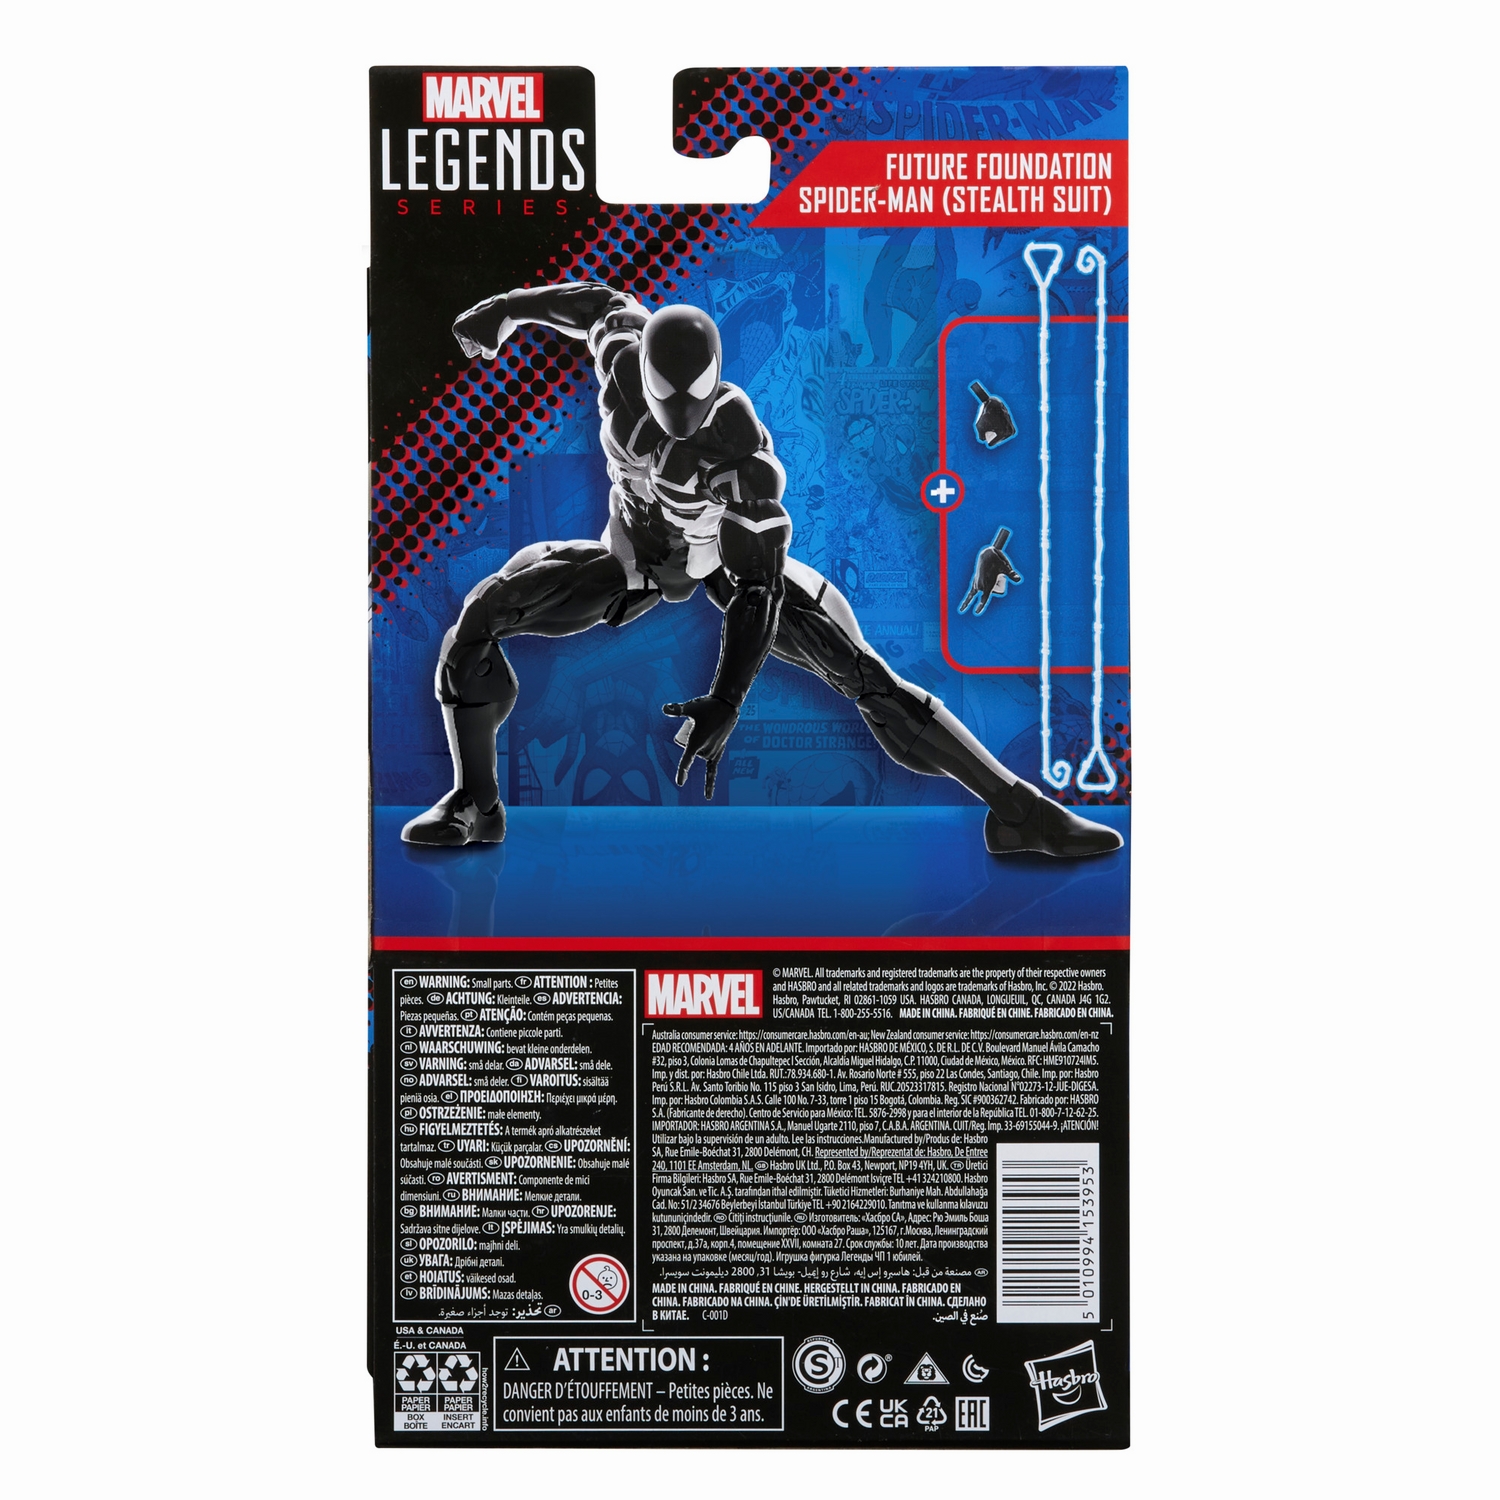 Marvel Legends Series Future Foundation Spider-Man (Stealth Suit) - Image 11.jpg